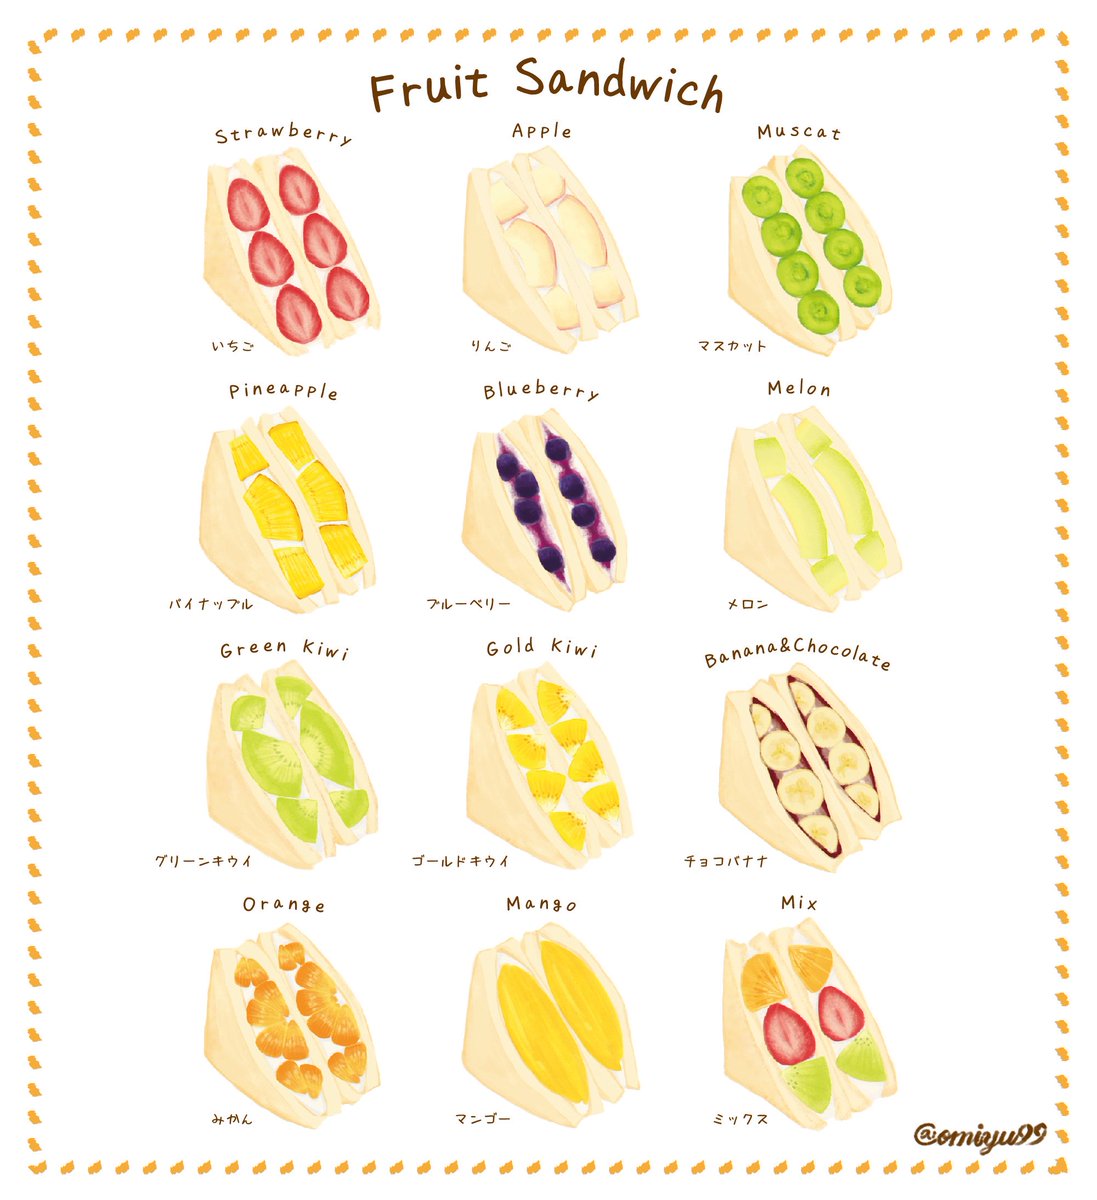 تويتر Omiyu على تويتر フルーツサンド フルーツサンド イラスト サンドイッチ フルーツ ご飯 いちご キウイ メニュー デザイン Sandwich Fruits Fruitssand Strawberry Illust Sweets Menu Design T Co q4zb1q5t